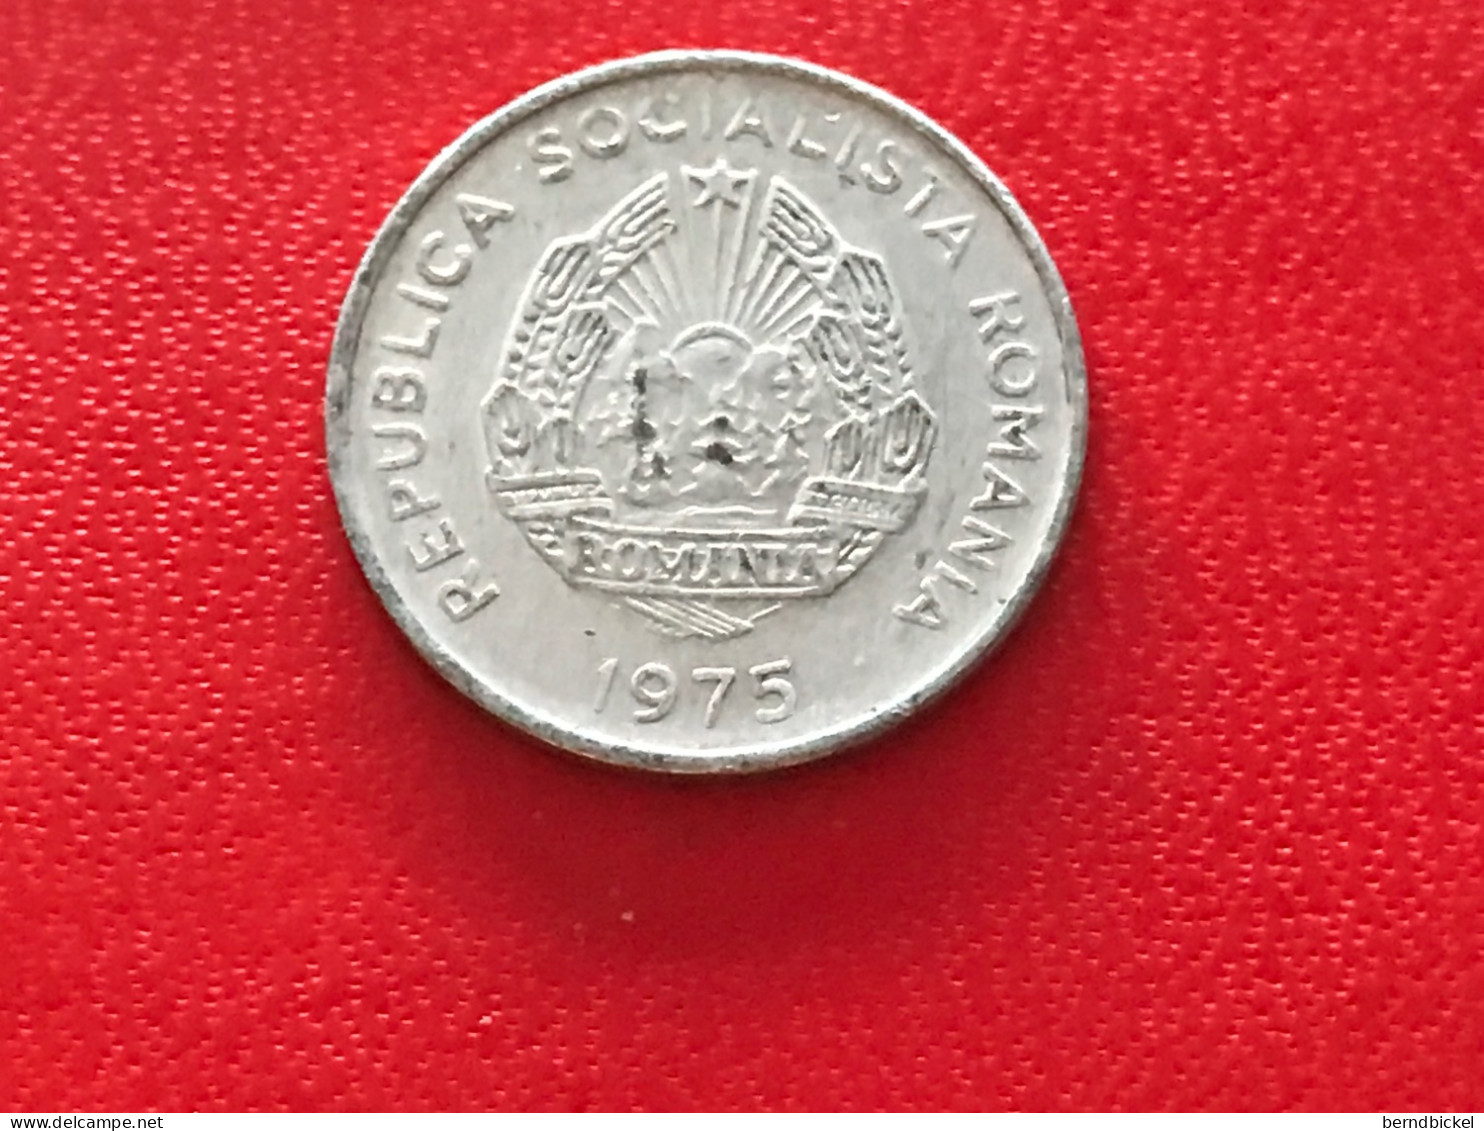 Münze Münzen Umlaufmünze Rumänien 15 Bani 1975 - Romania